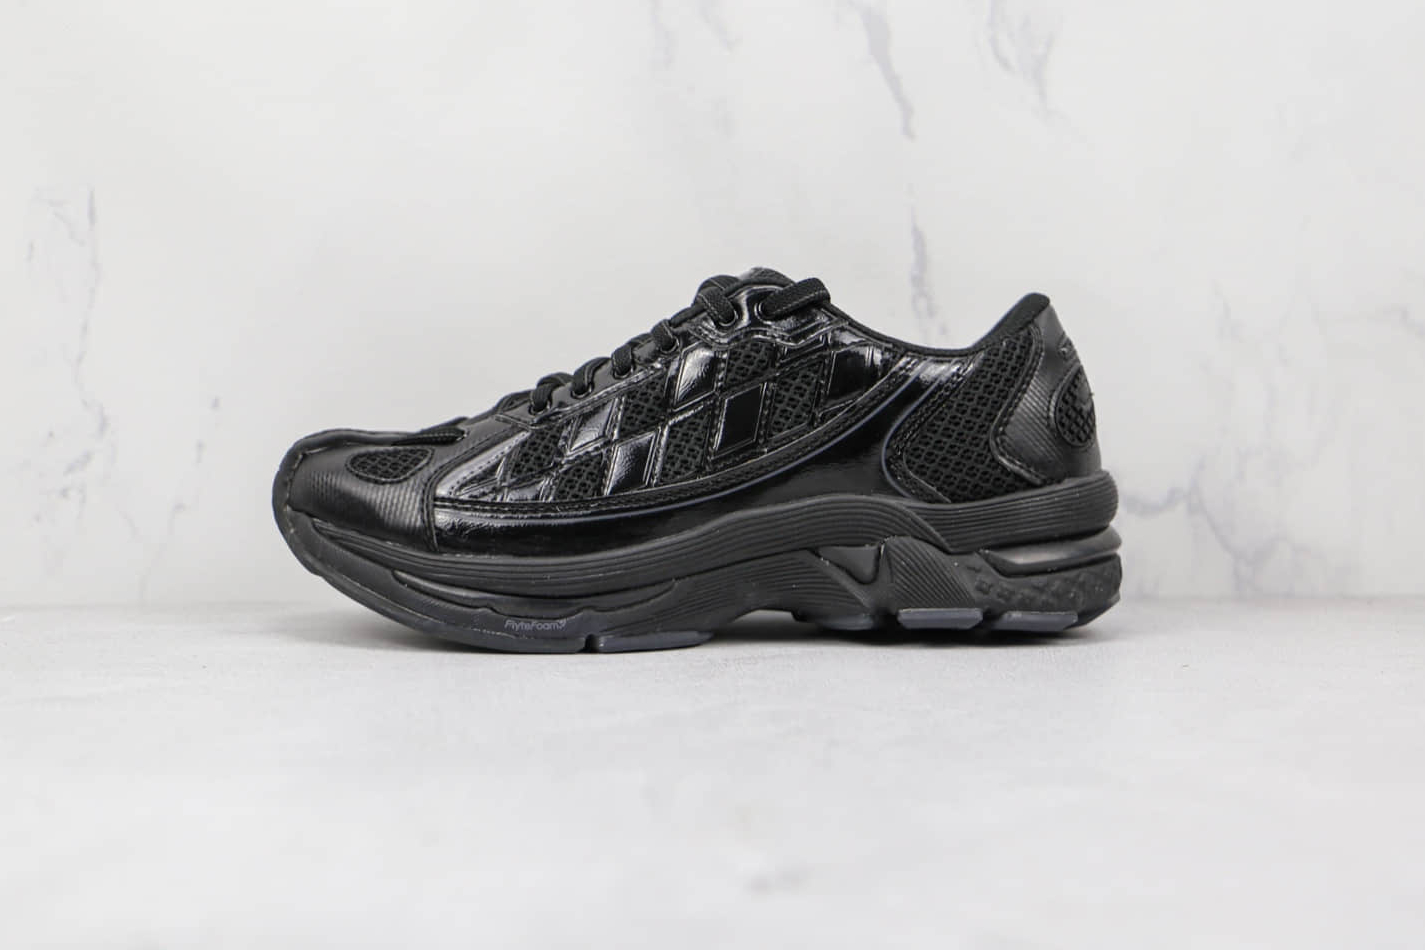 Asics Kiko Kostadinov x Gel Kiril 'Black' 1023A019-001 - Premium Collaborative Footwear | Limited Stock Available